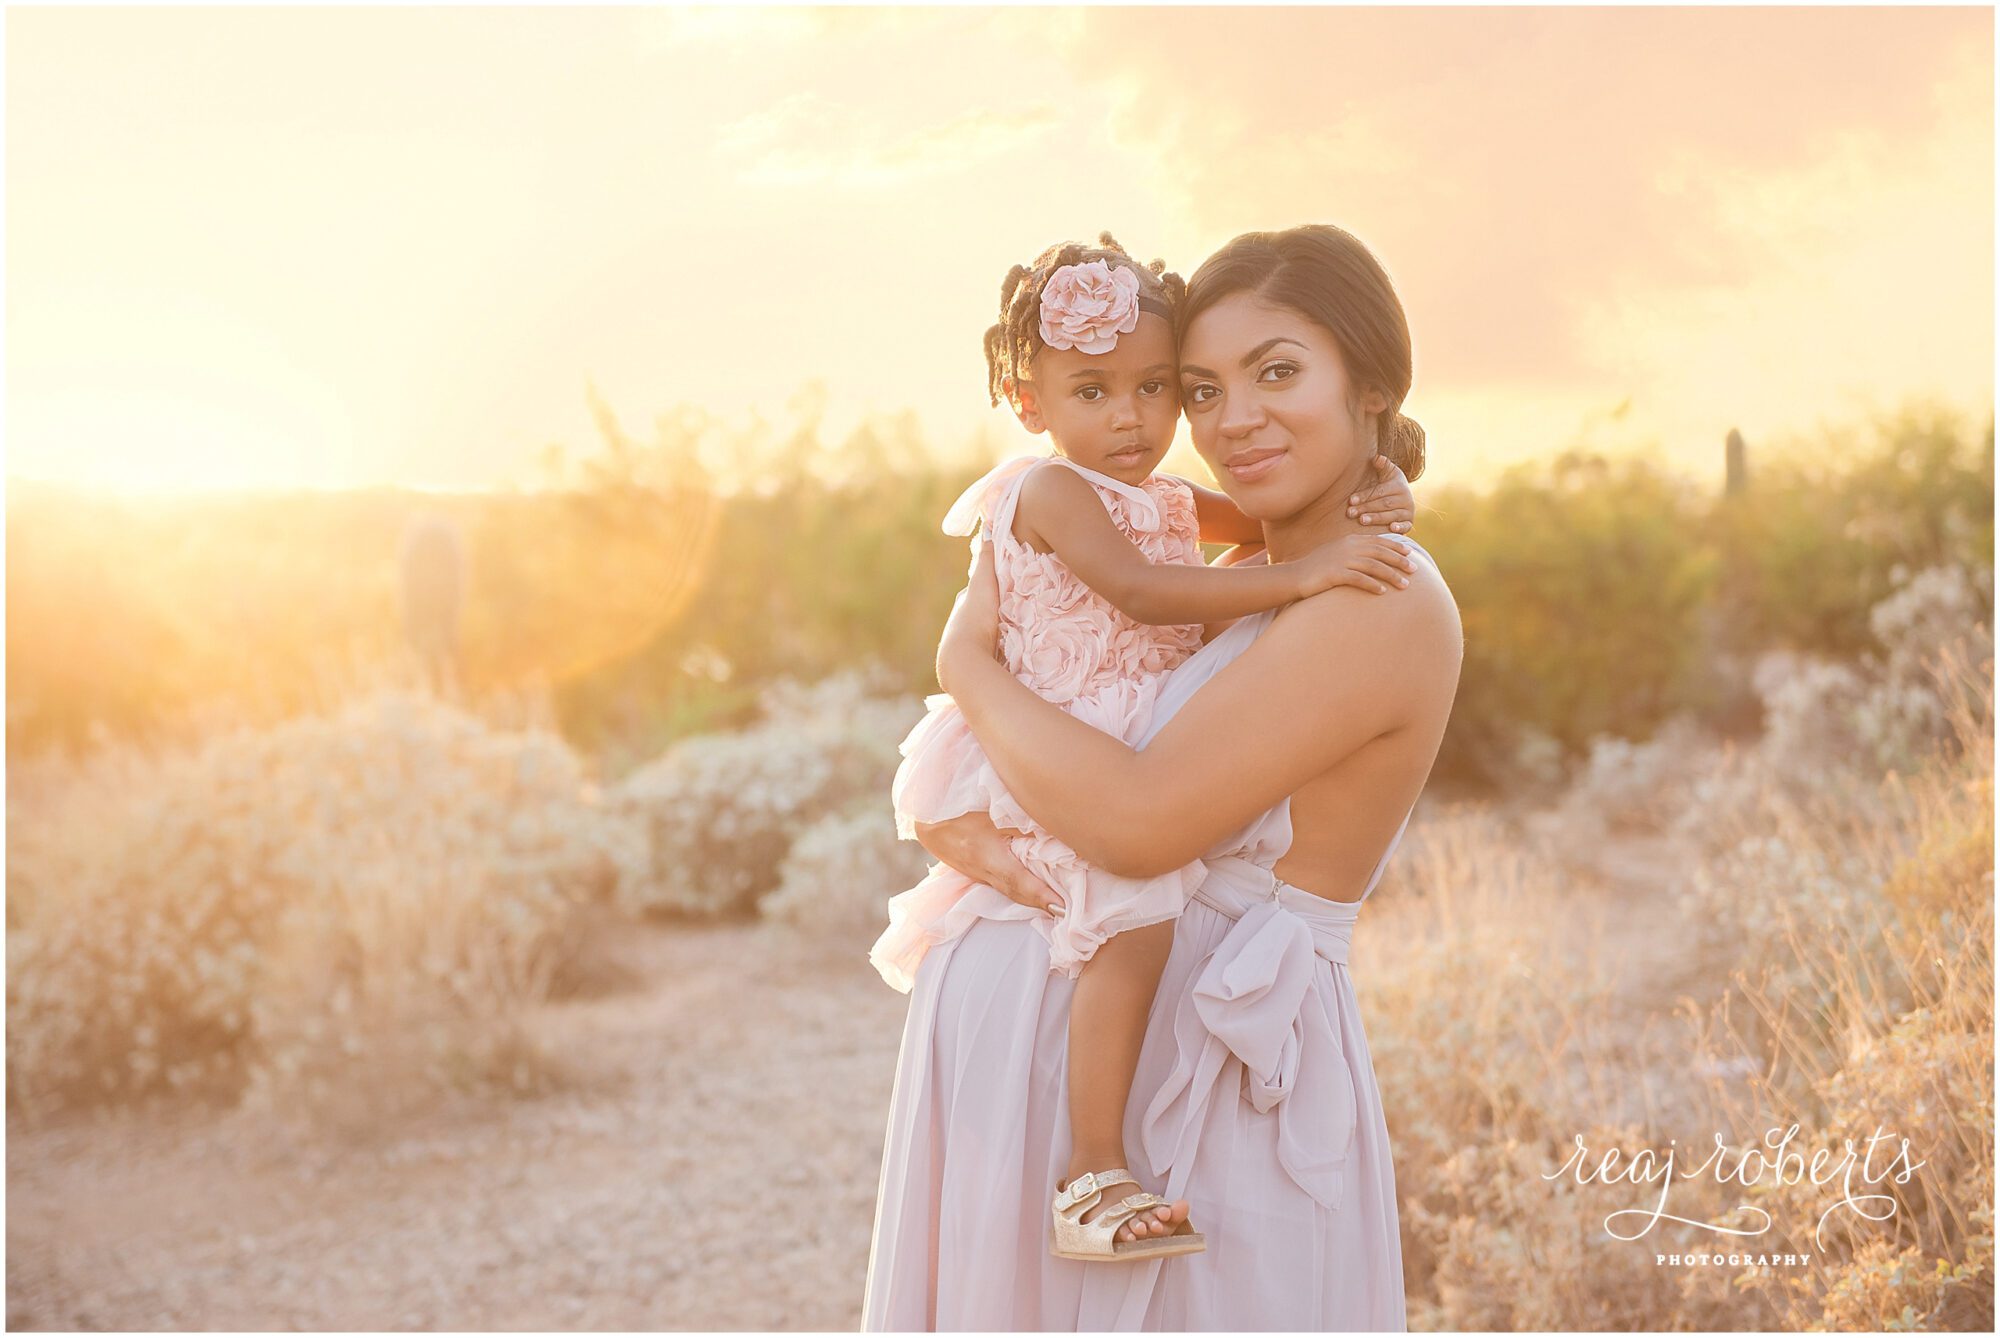 Maternity photos with older sibling | Reaj Roberts Photography | Chandler, Arizona